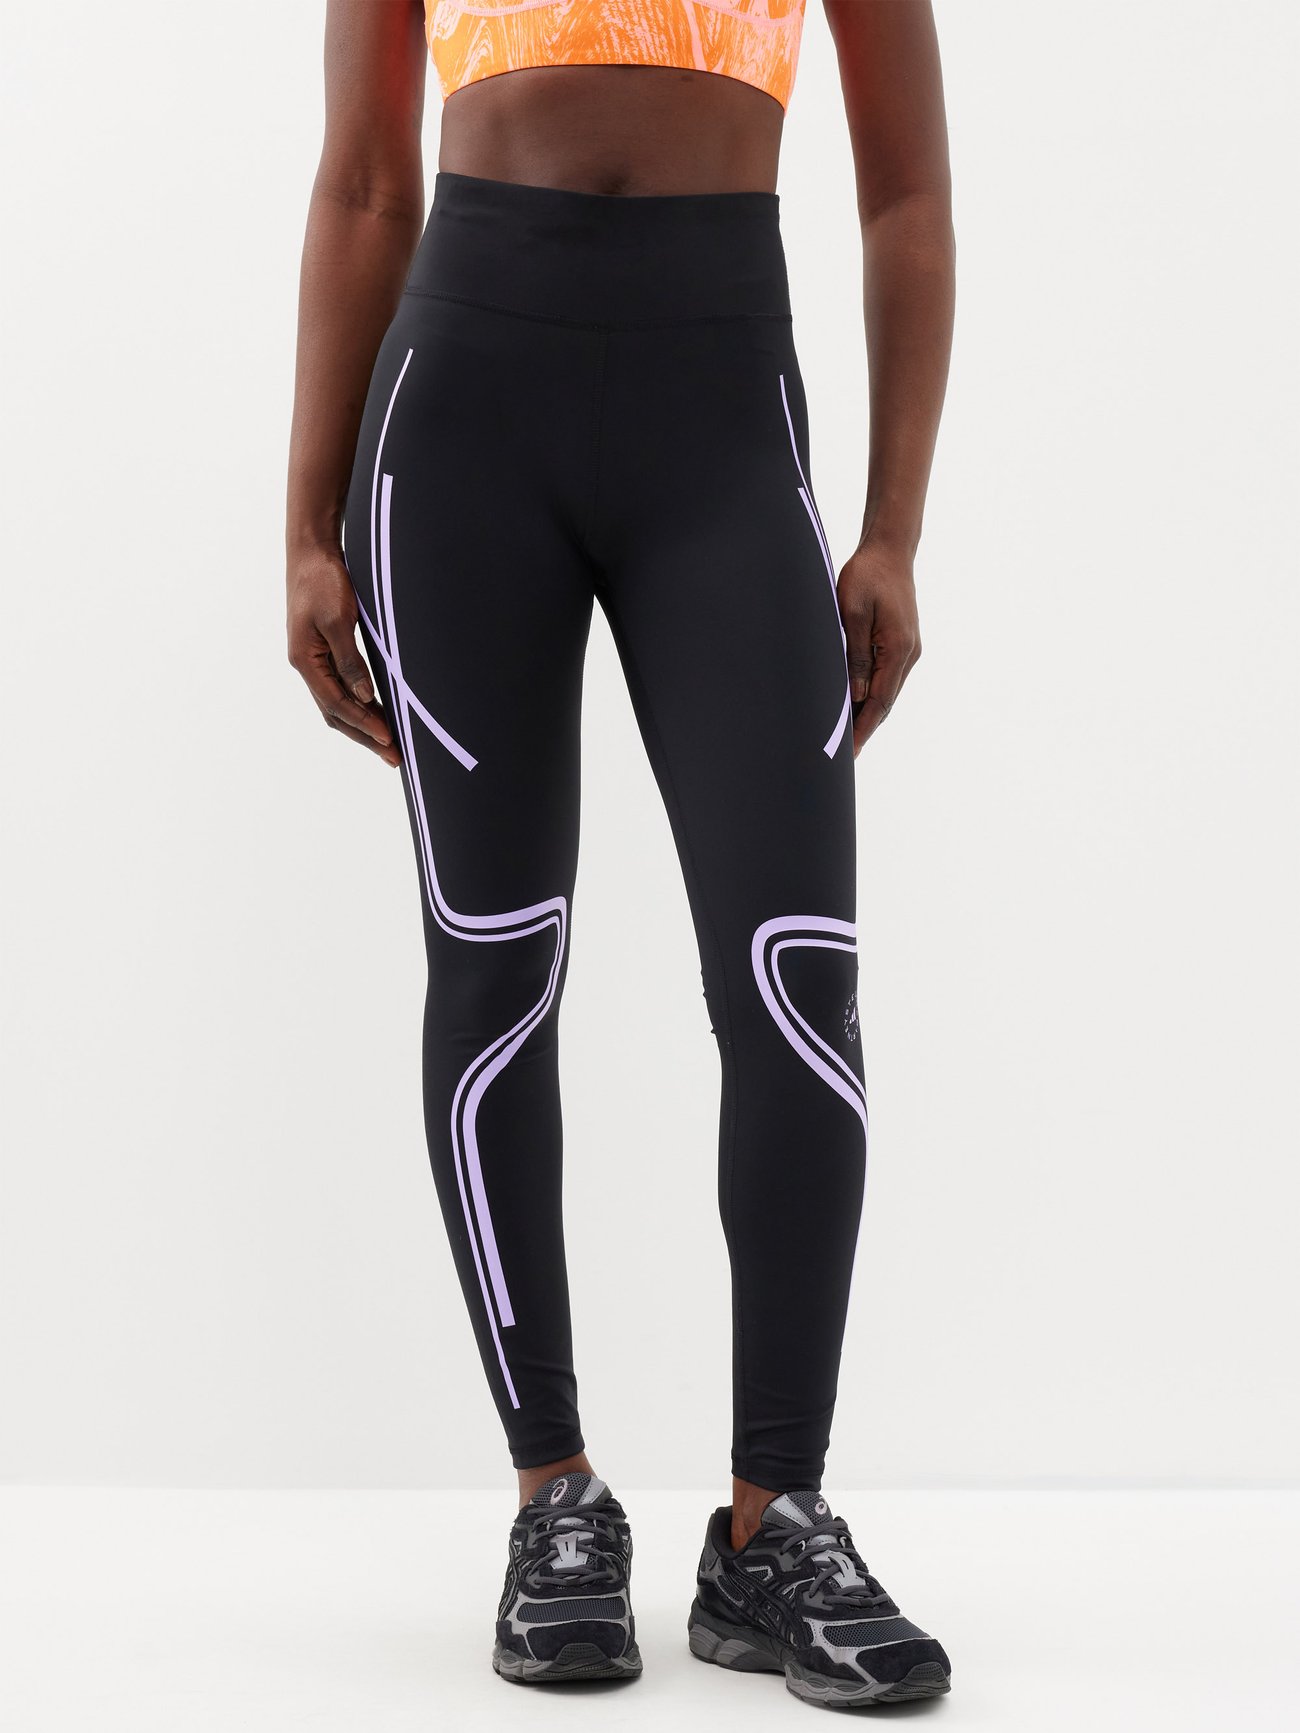 Black Erica technical-jersey stirrup leggings, Bogner